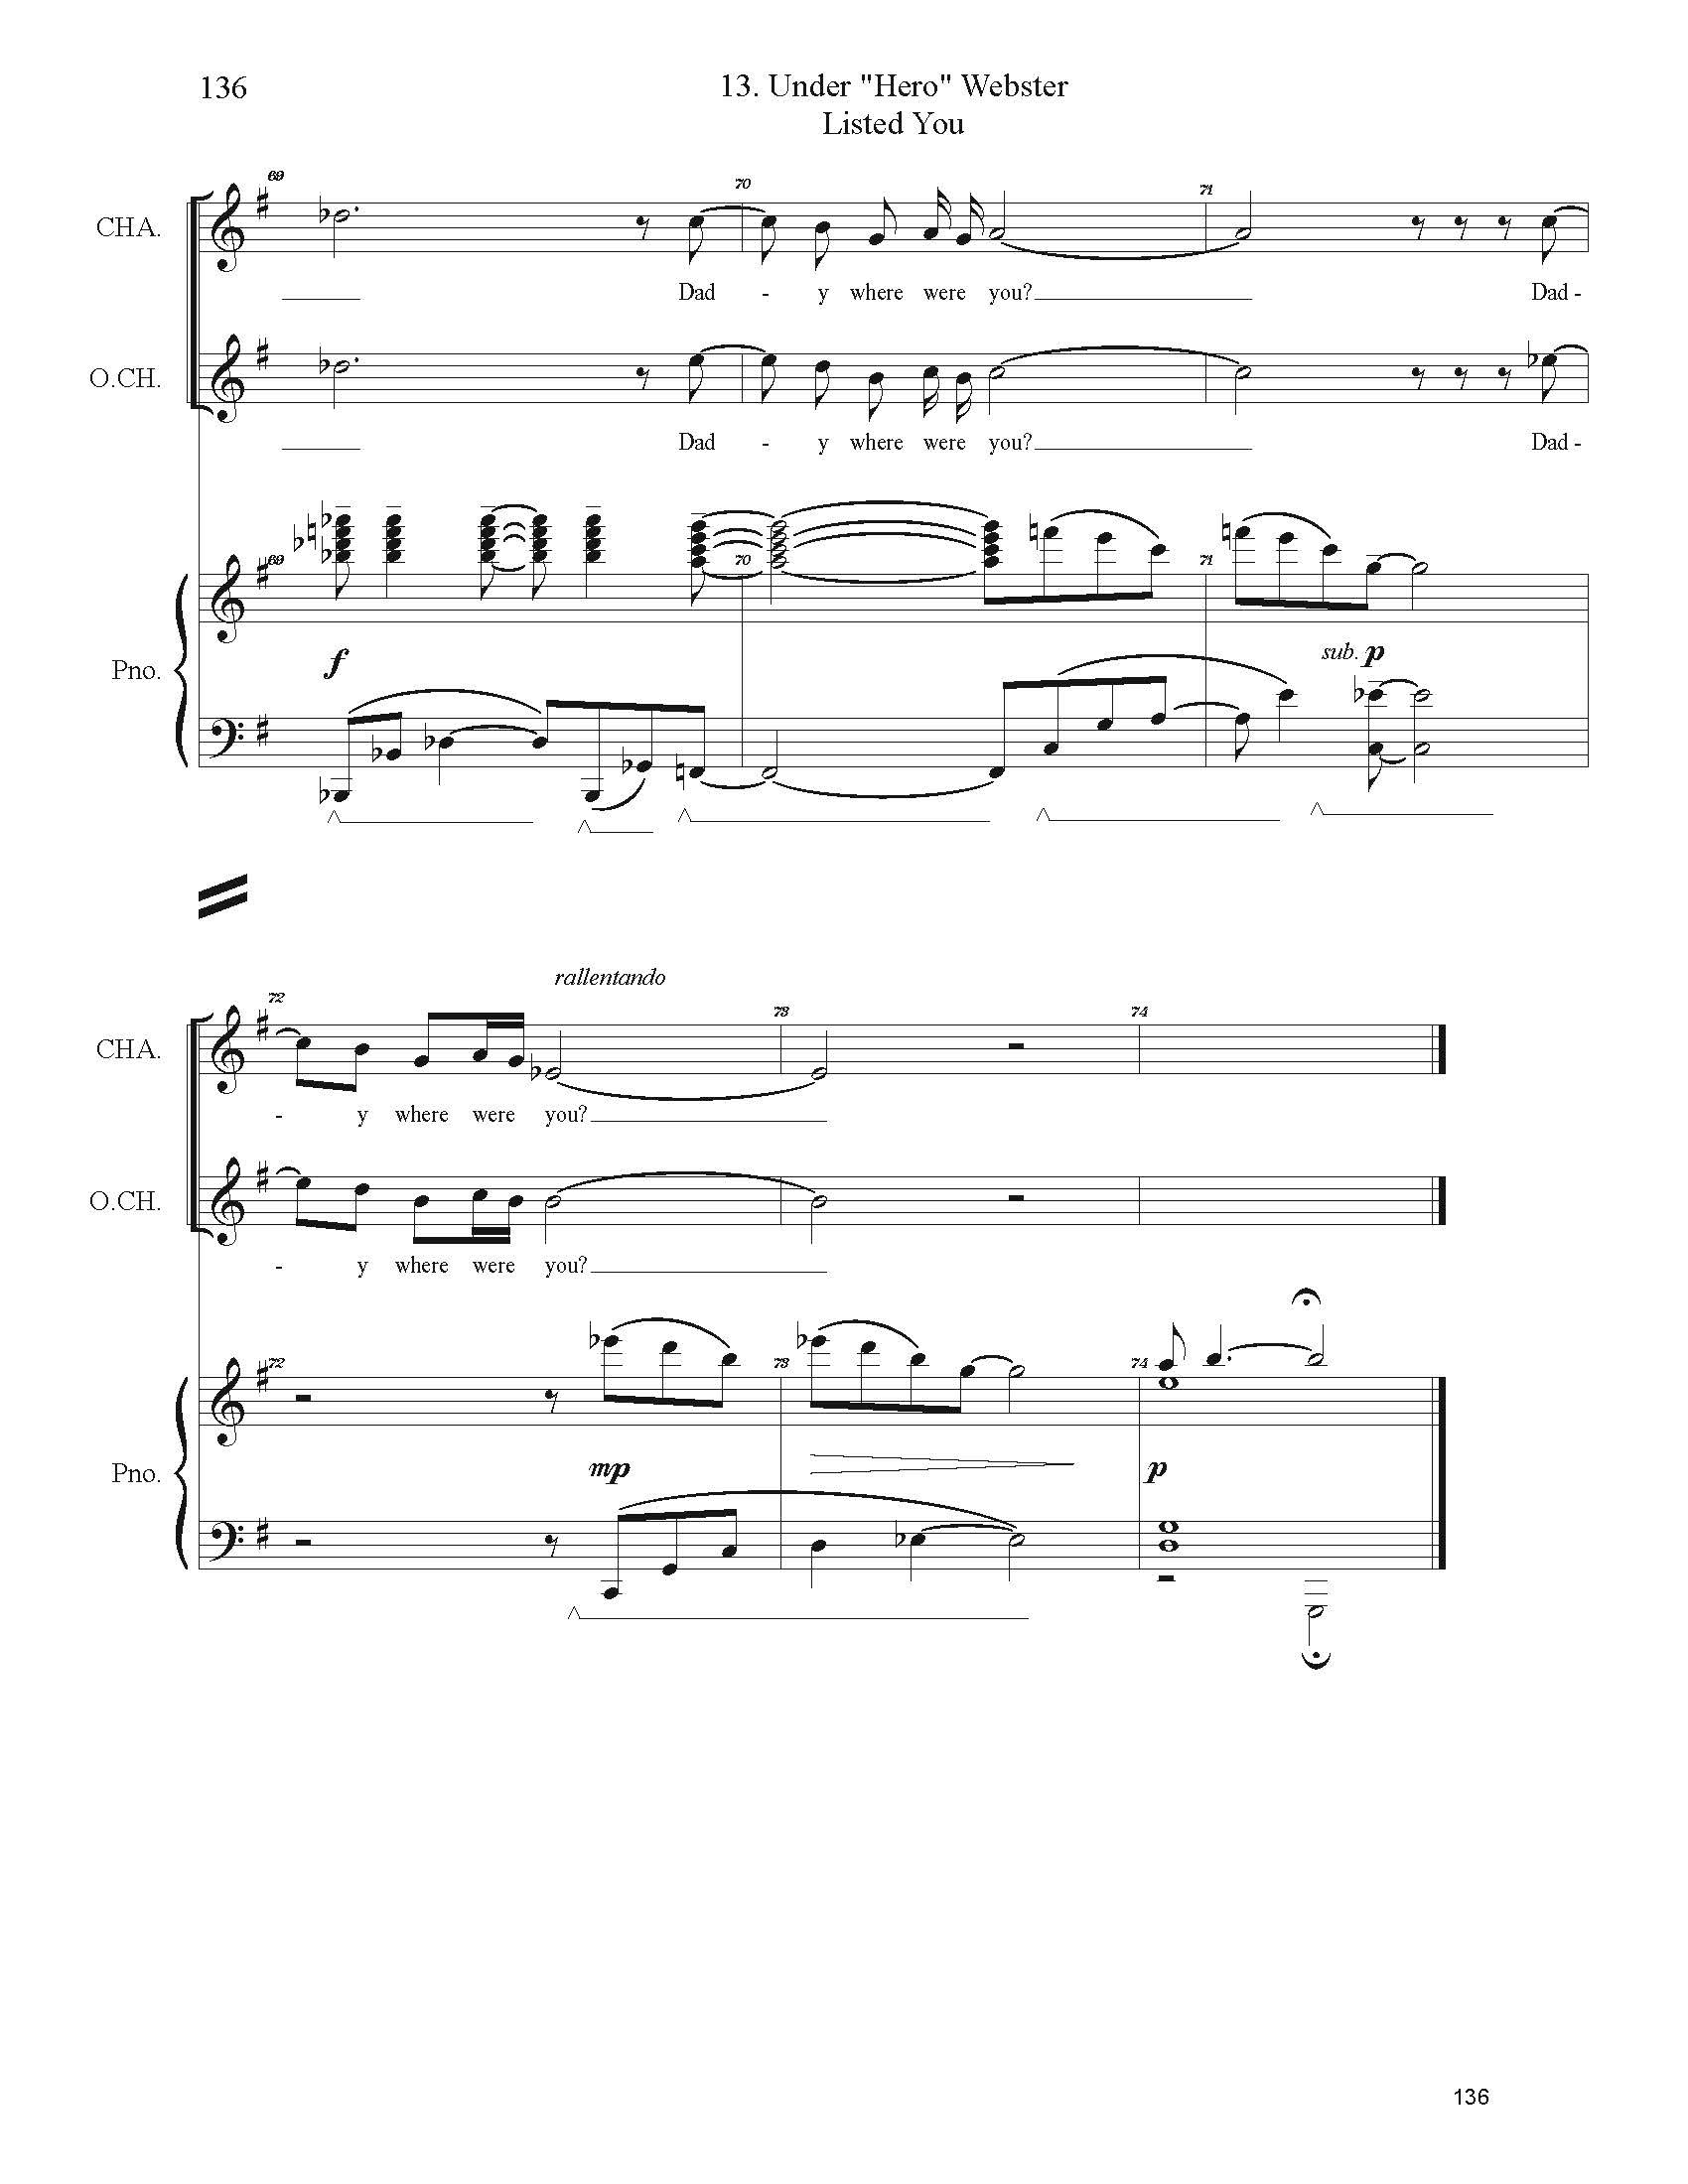 FULL PIANO VOCAL SCORE DRAFT 1 - Score_Page_136.jpg